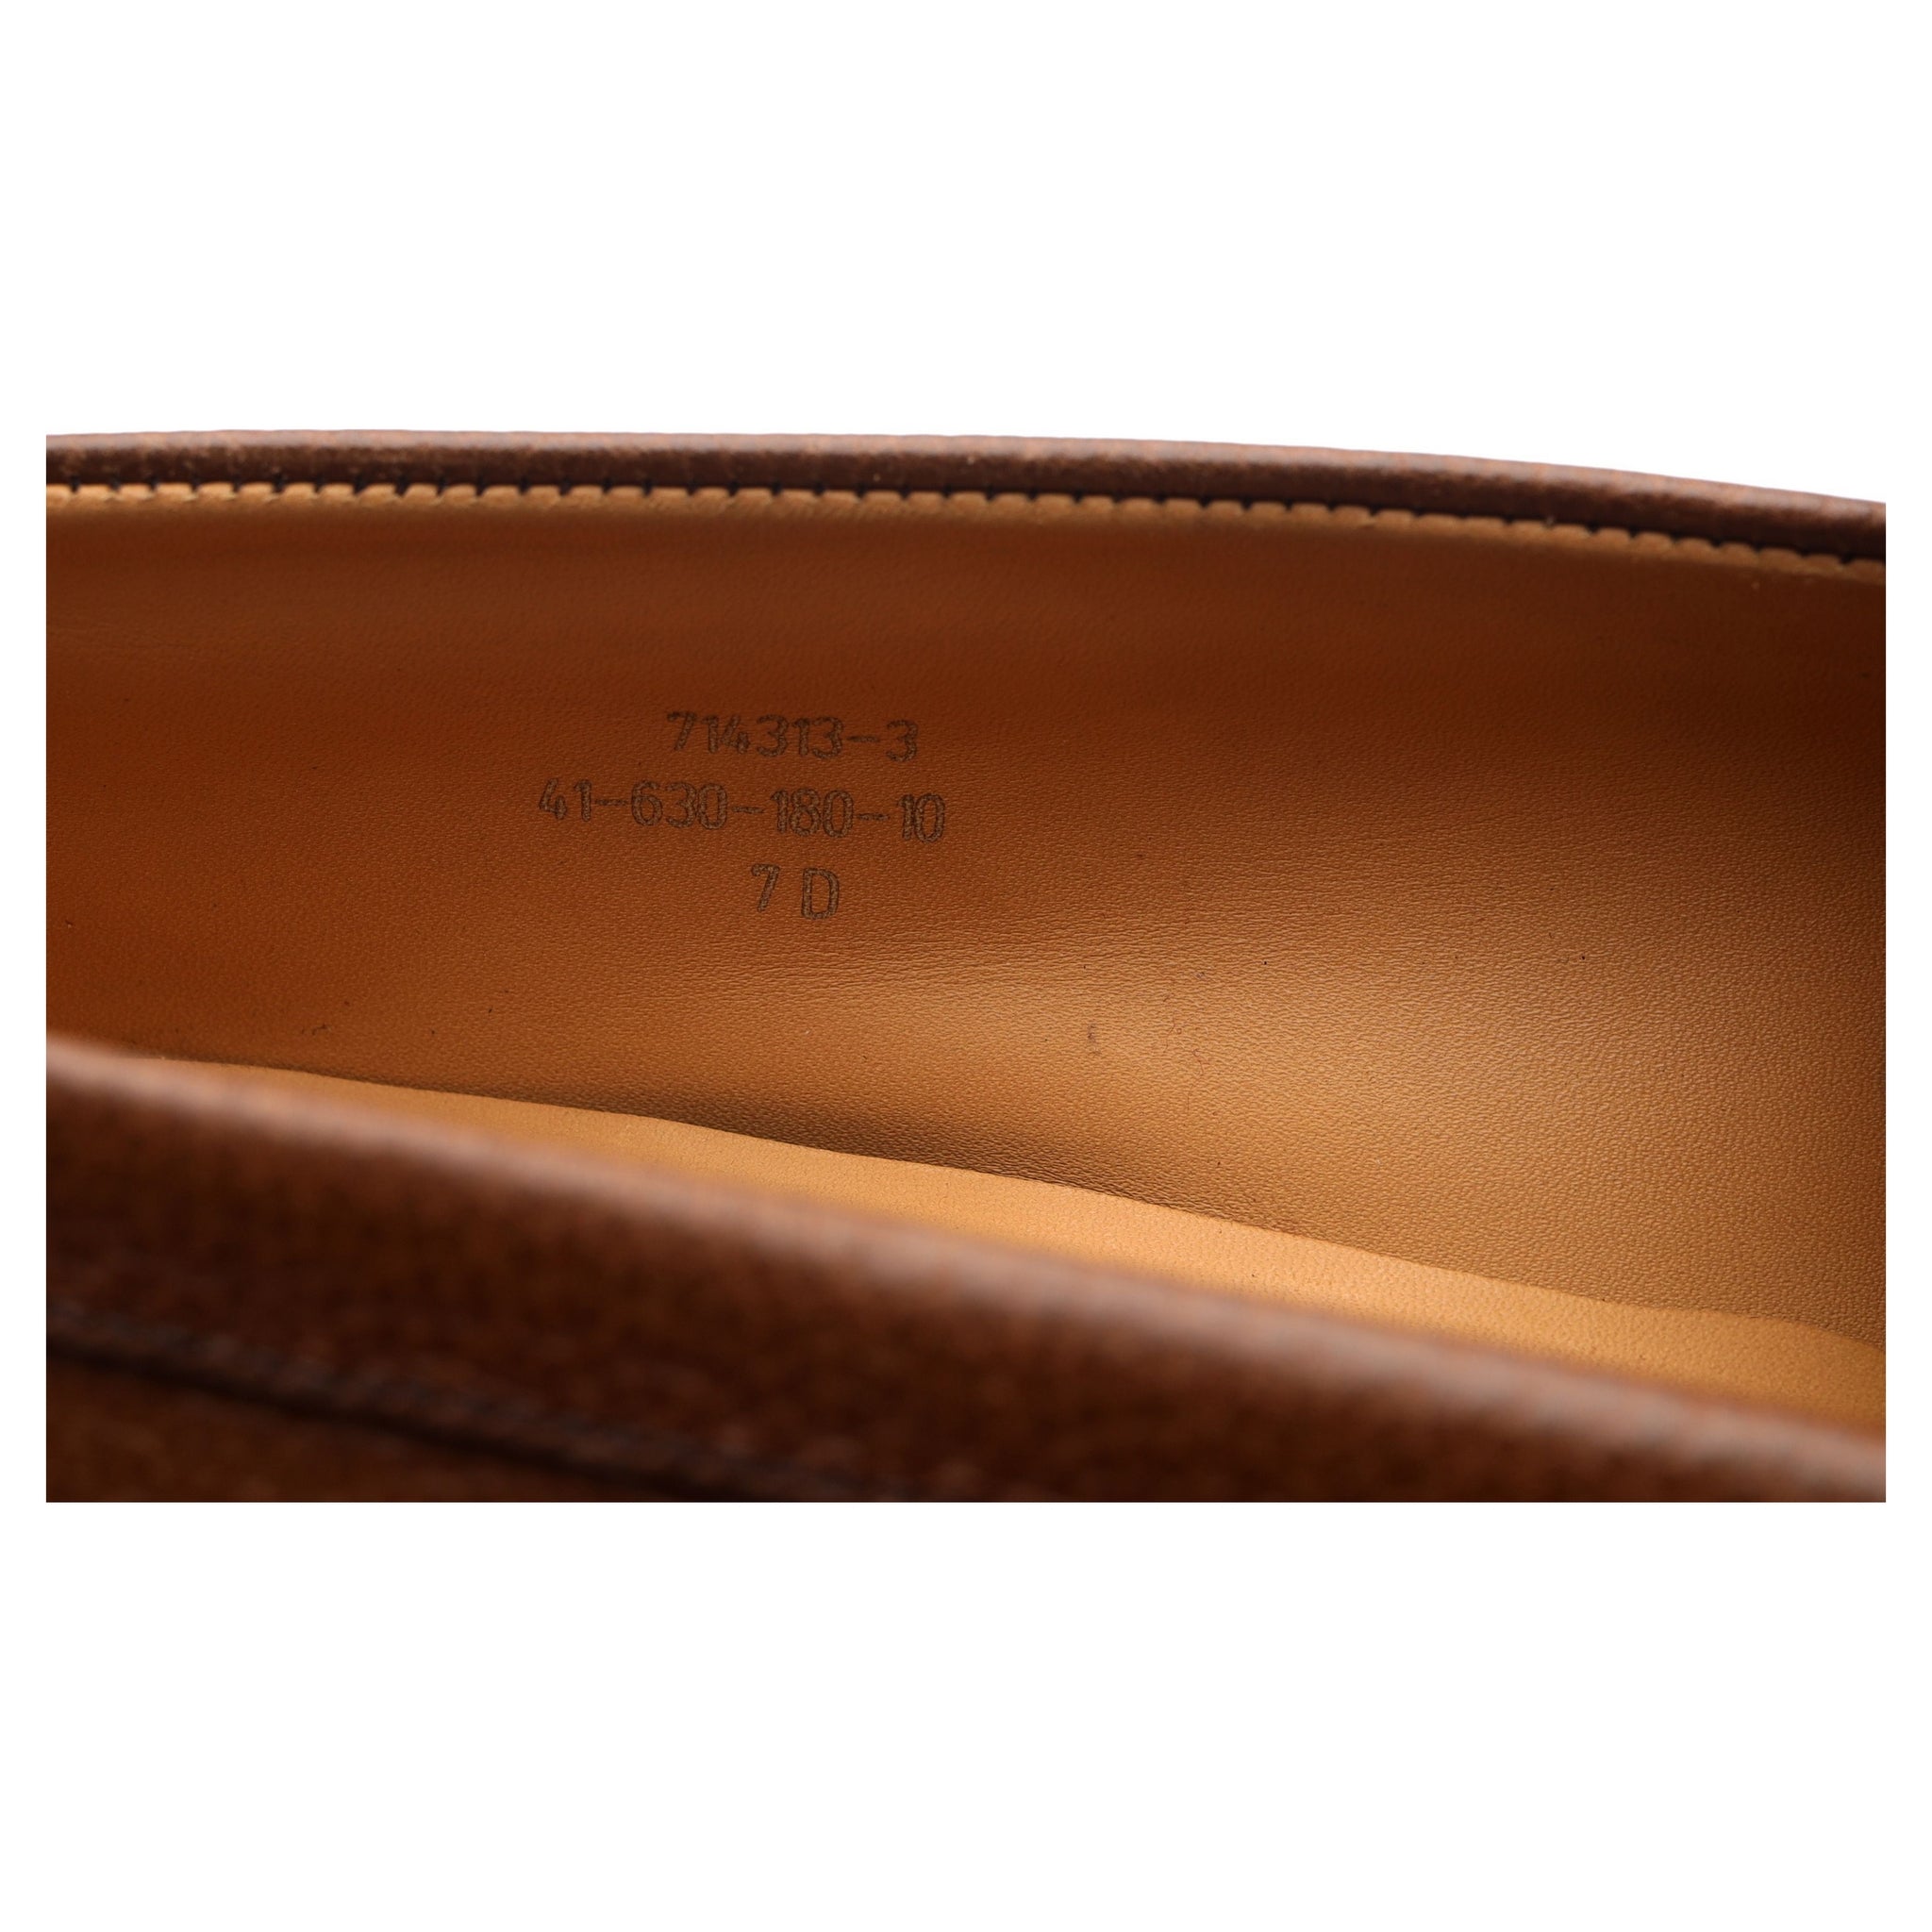 LOUIS VUITTON Saint Germain Leather Loafers Brown Size 7L / 41 Large